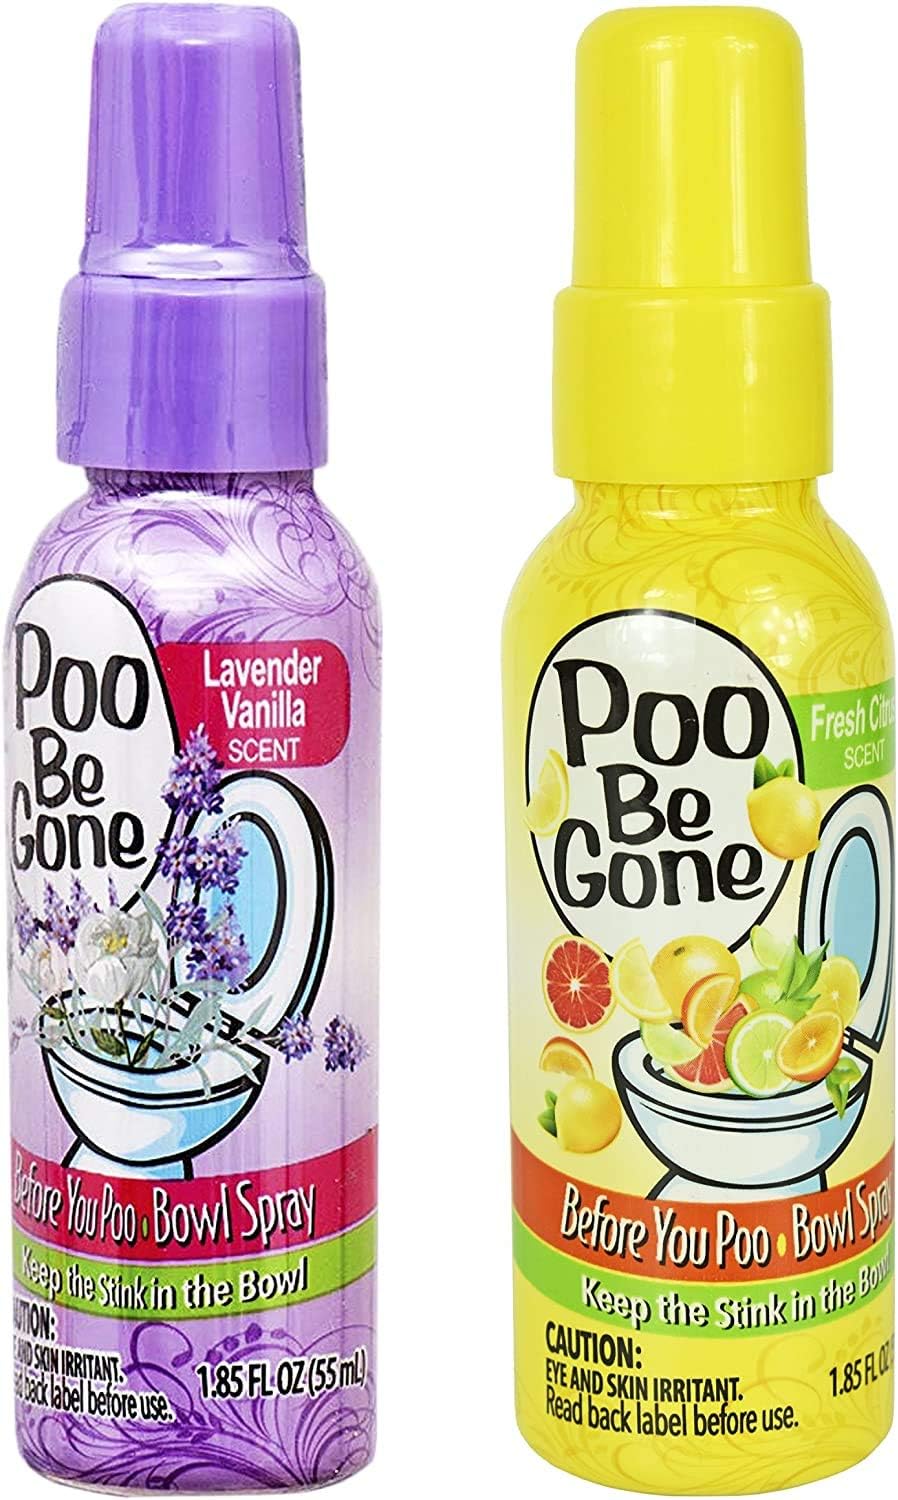 Poo Be Gone Toilet Spray 1.85oz - Before You Go Toilet Bathroom Deodorizer 2 Pack (Lavender & Citrus) : Health & Household